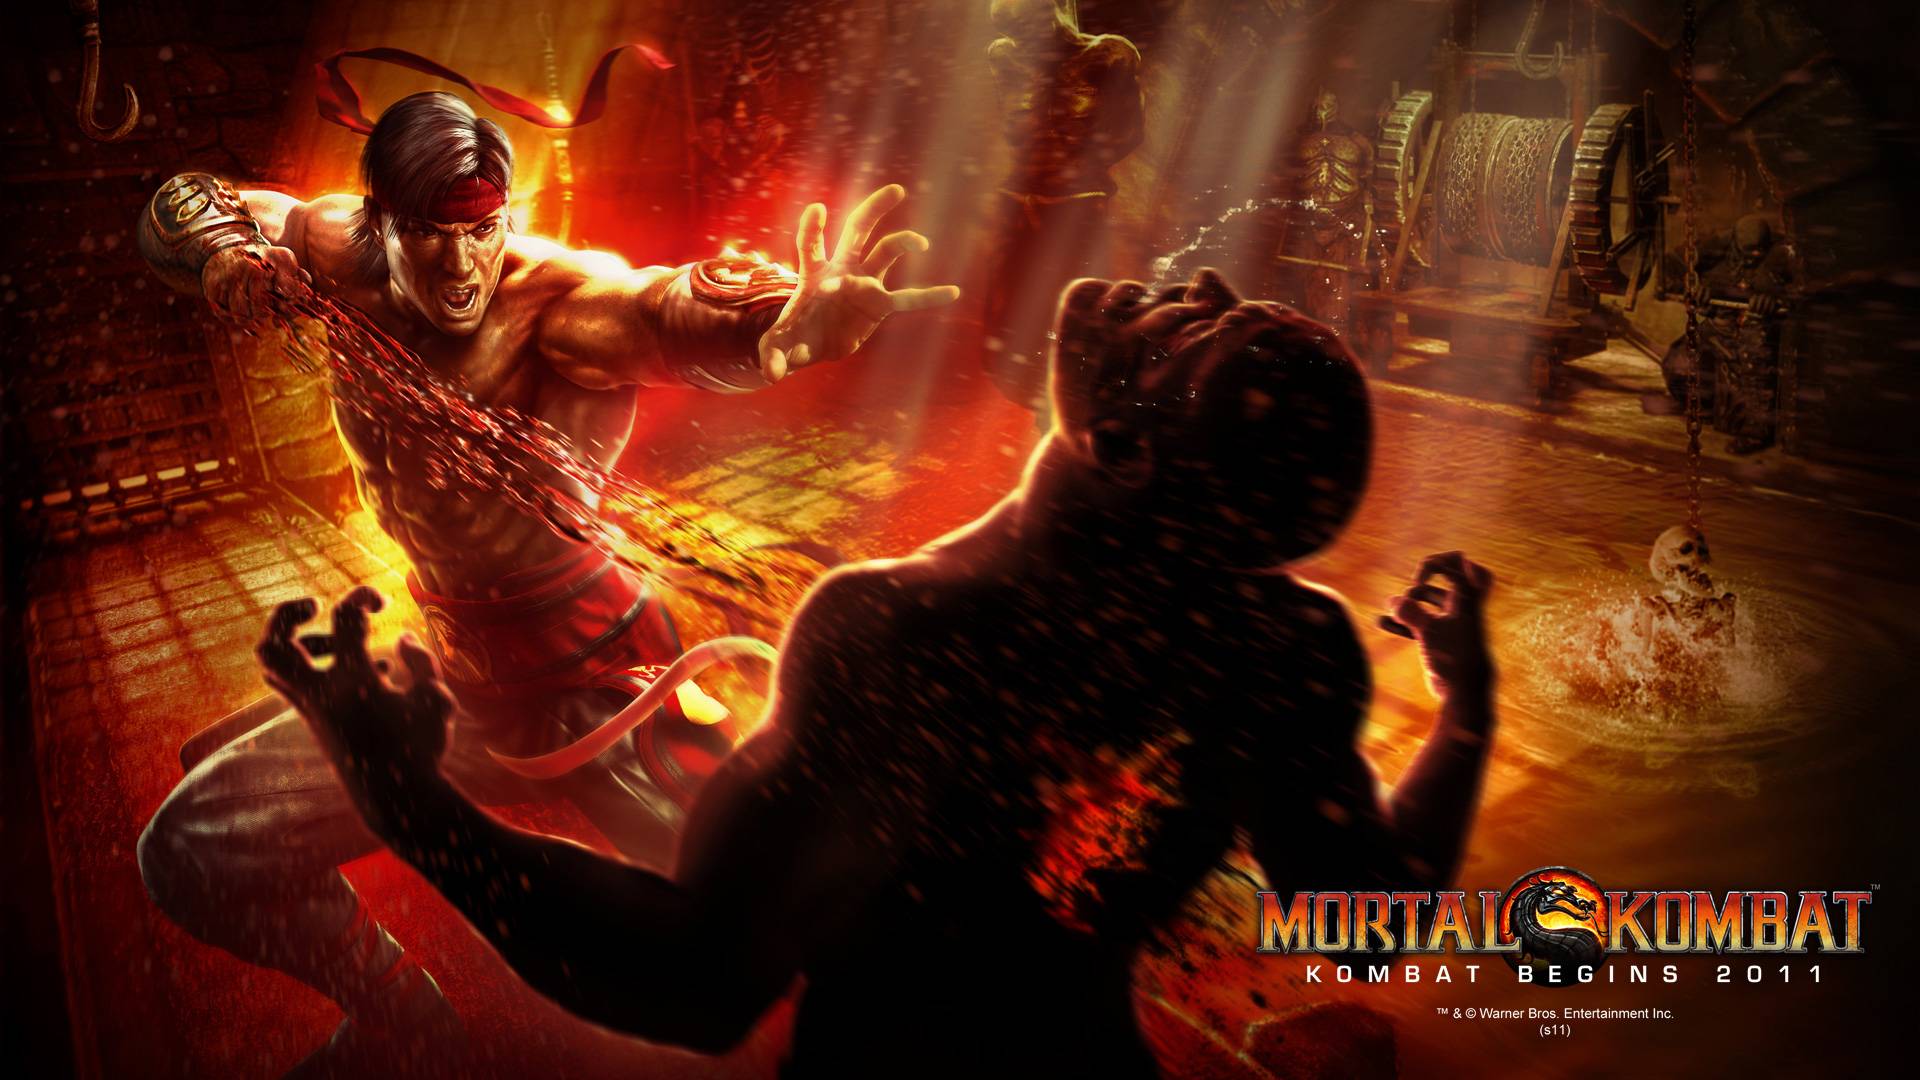 Mortal Kombat Wallpaper in full 1080P HD « GamingBolt.com: Video